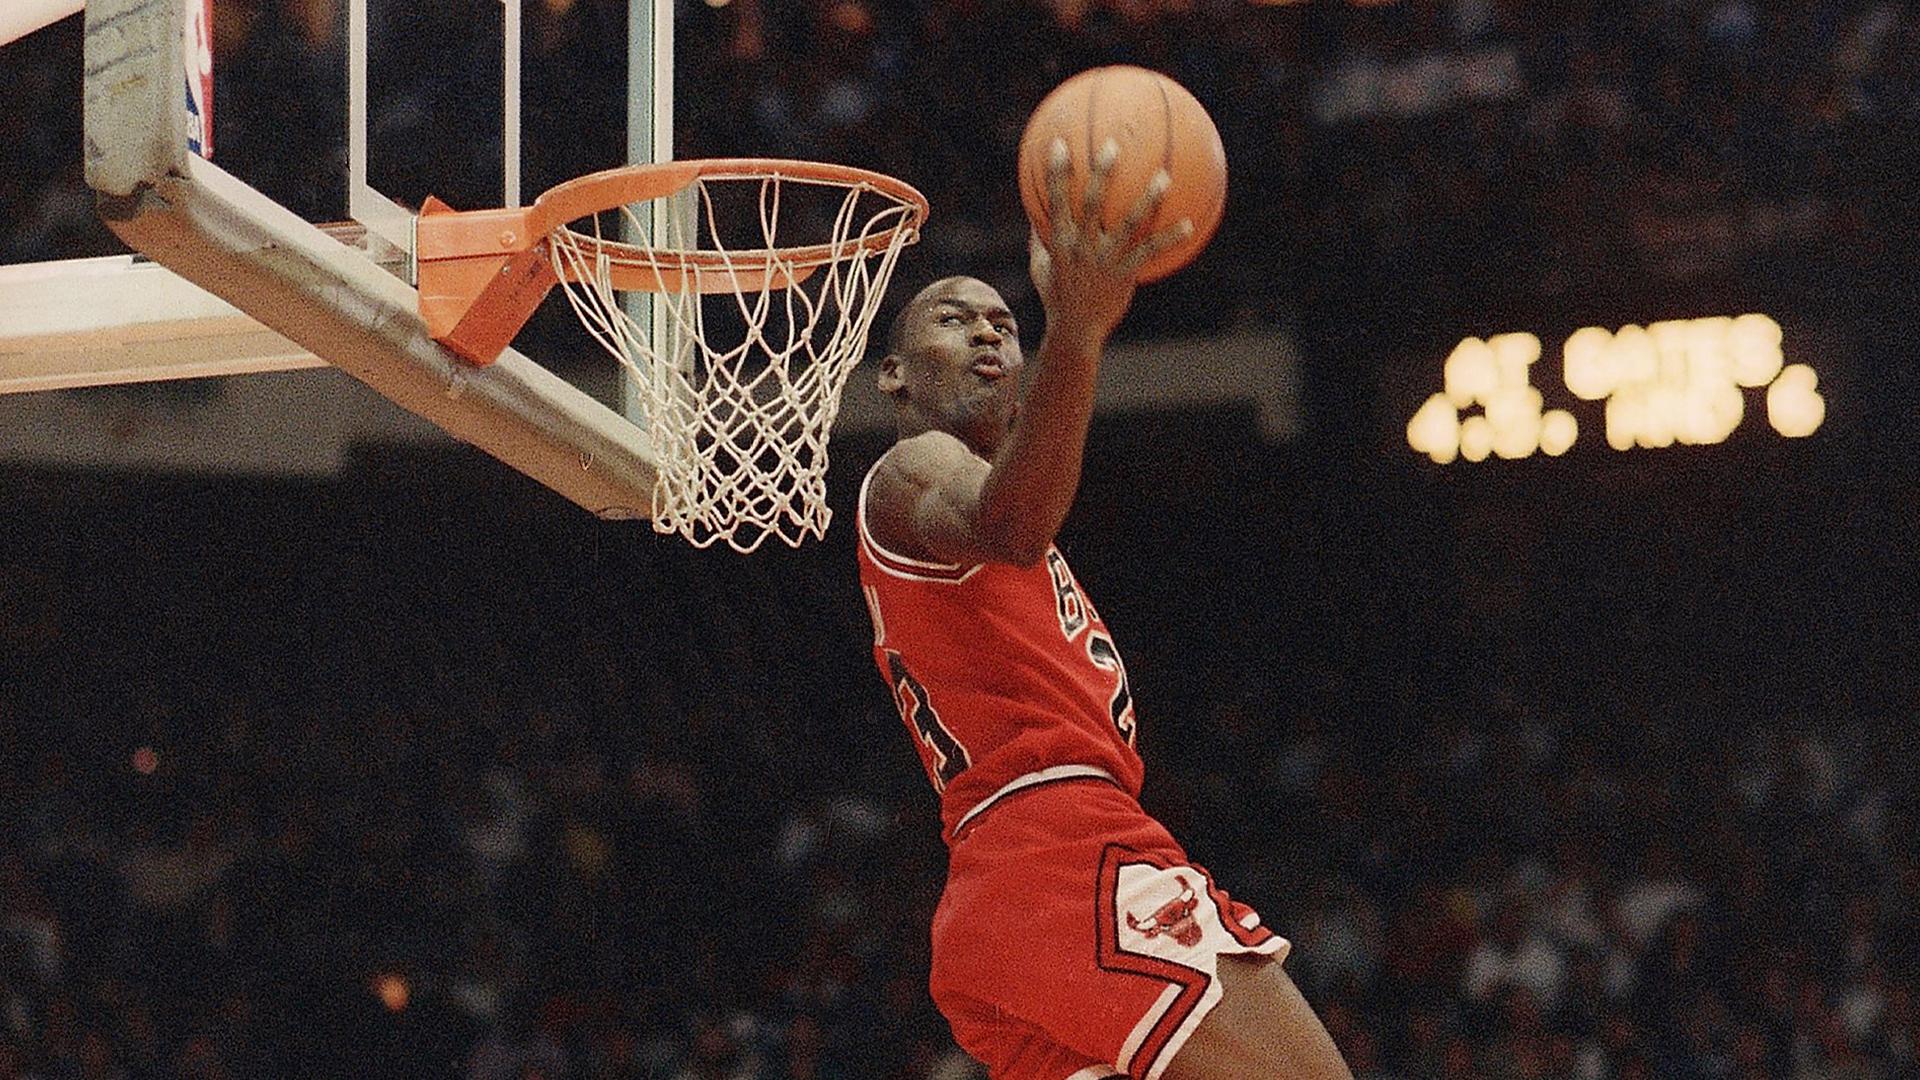 Michael Jordan Dunking Wallpapers Top Free Michael Jordan Dunking Backgrounds Wallpaperaccess 